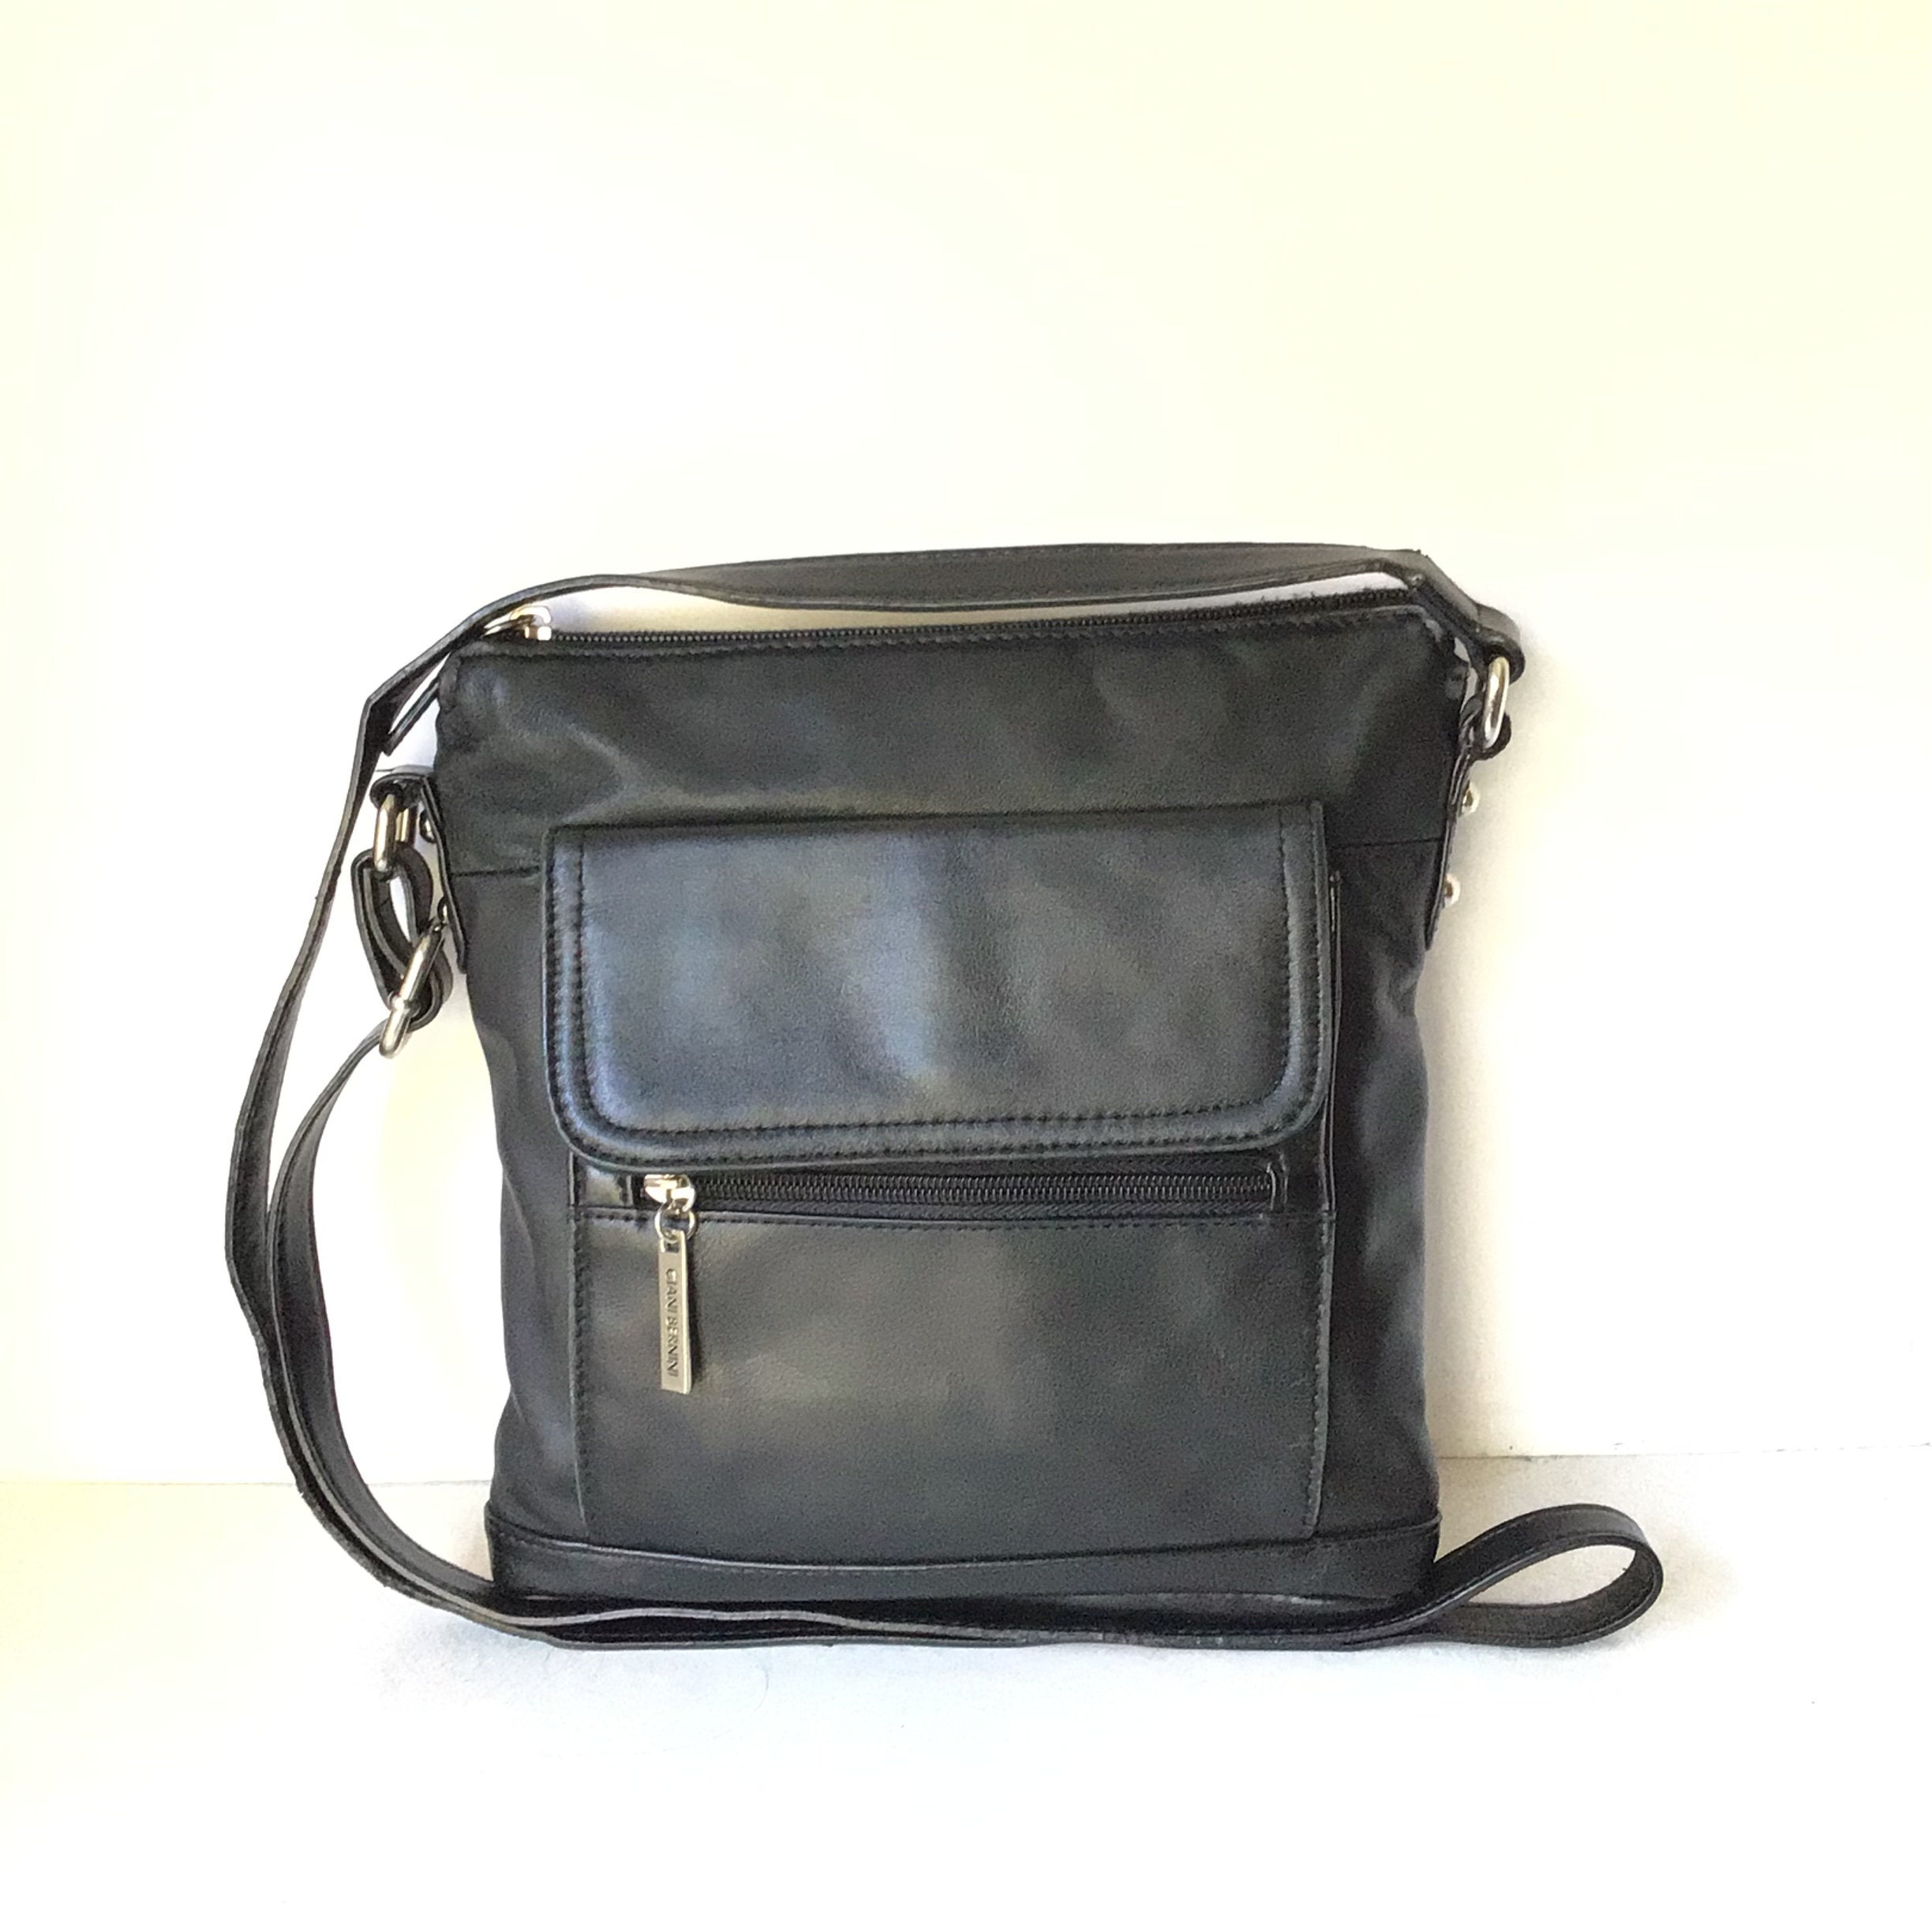 GIANI BERNINI Black Satchel Bag | Satchel bags, Black satchel, Bags